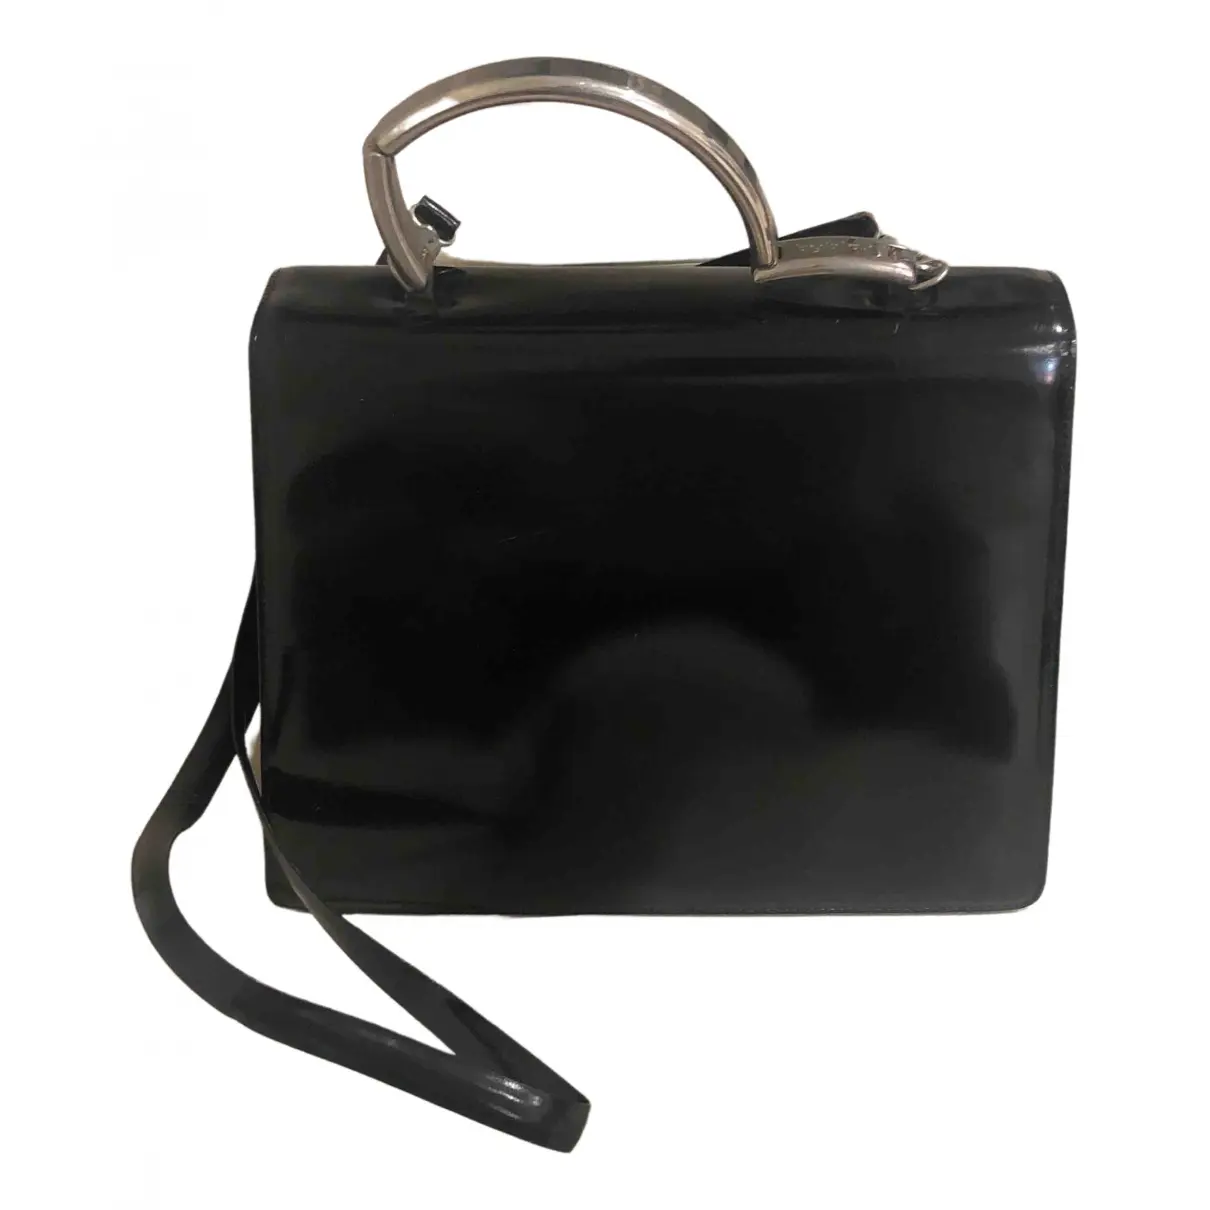 Patent leather handbag Byblos